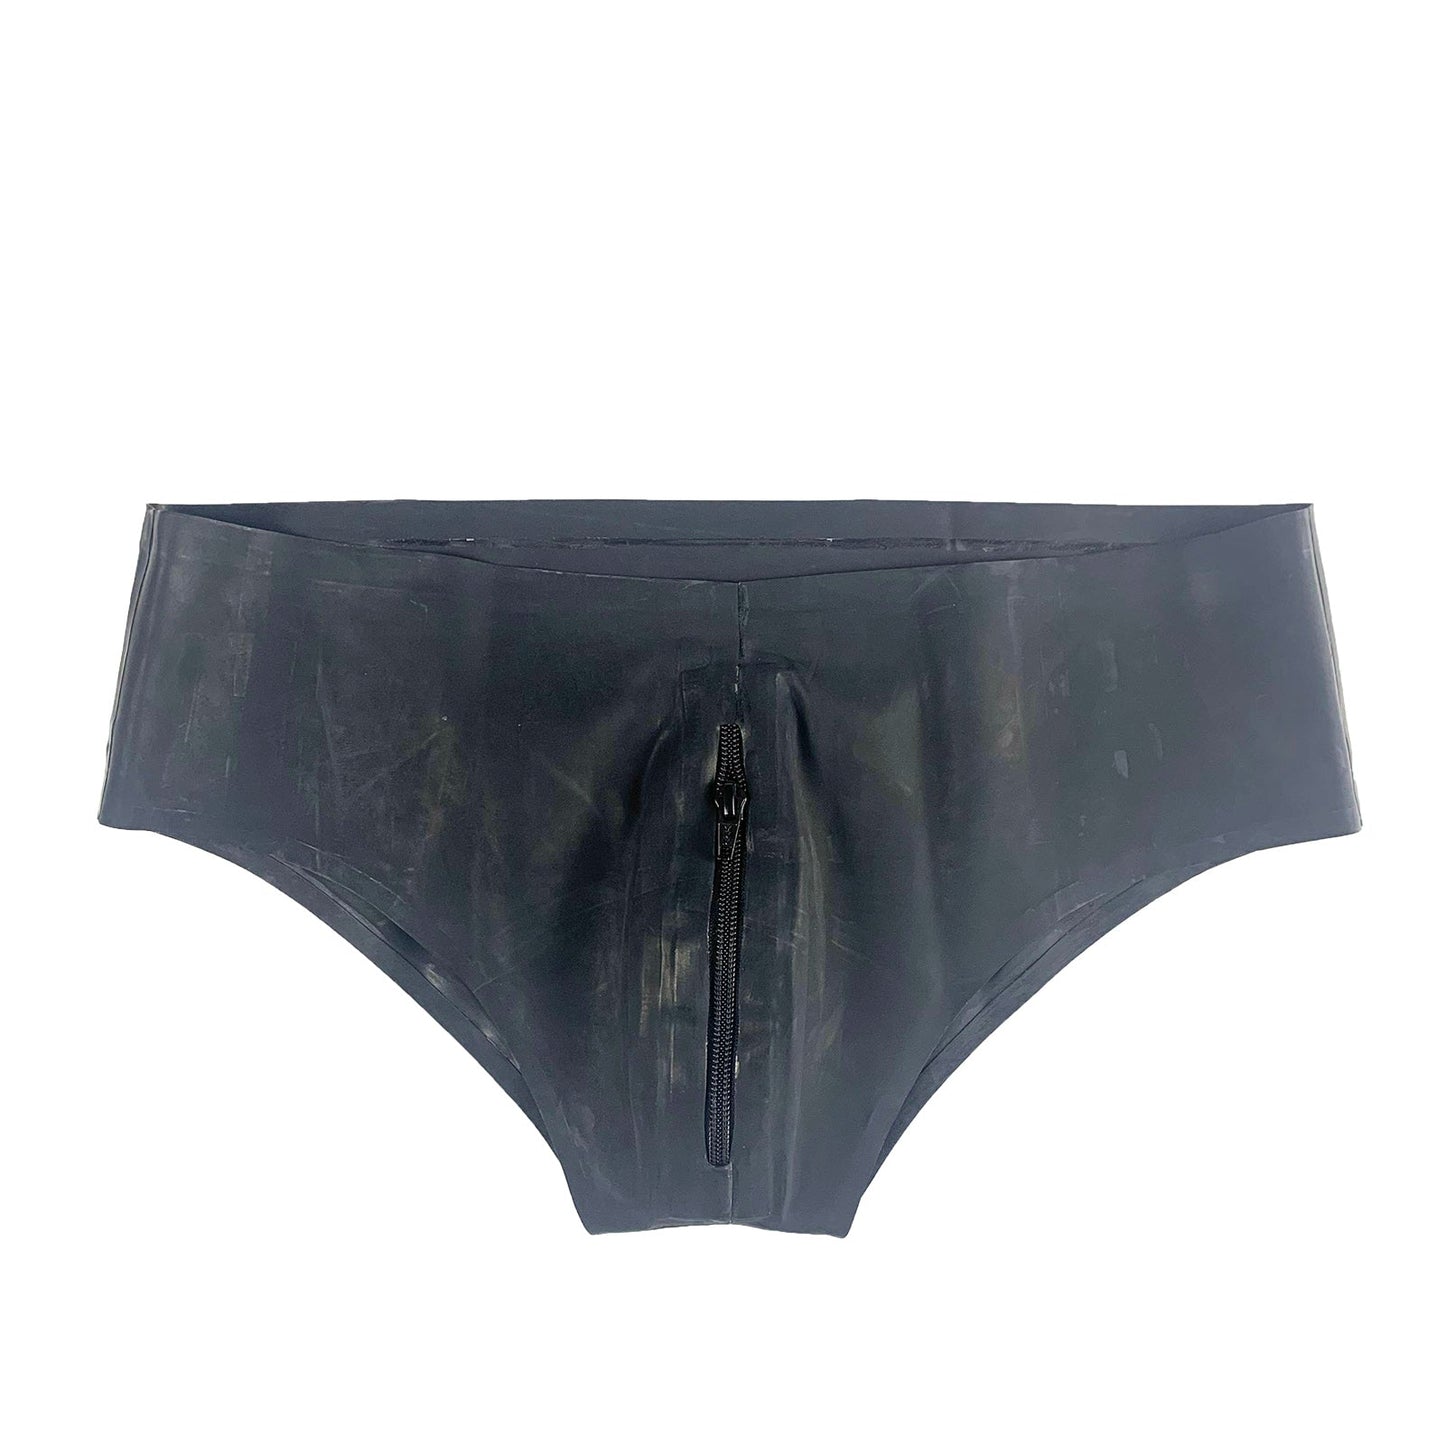 MONNIK Latex Men Briefs Shorts Front Zipper Design with Rear Red Anal Sheath Men Gay Underwear Fetish Tight Briefs Handmade